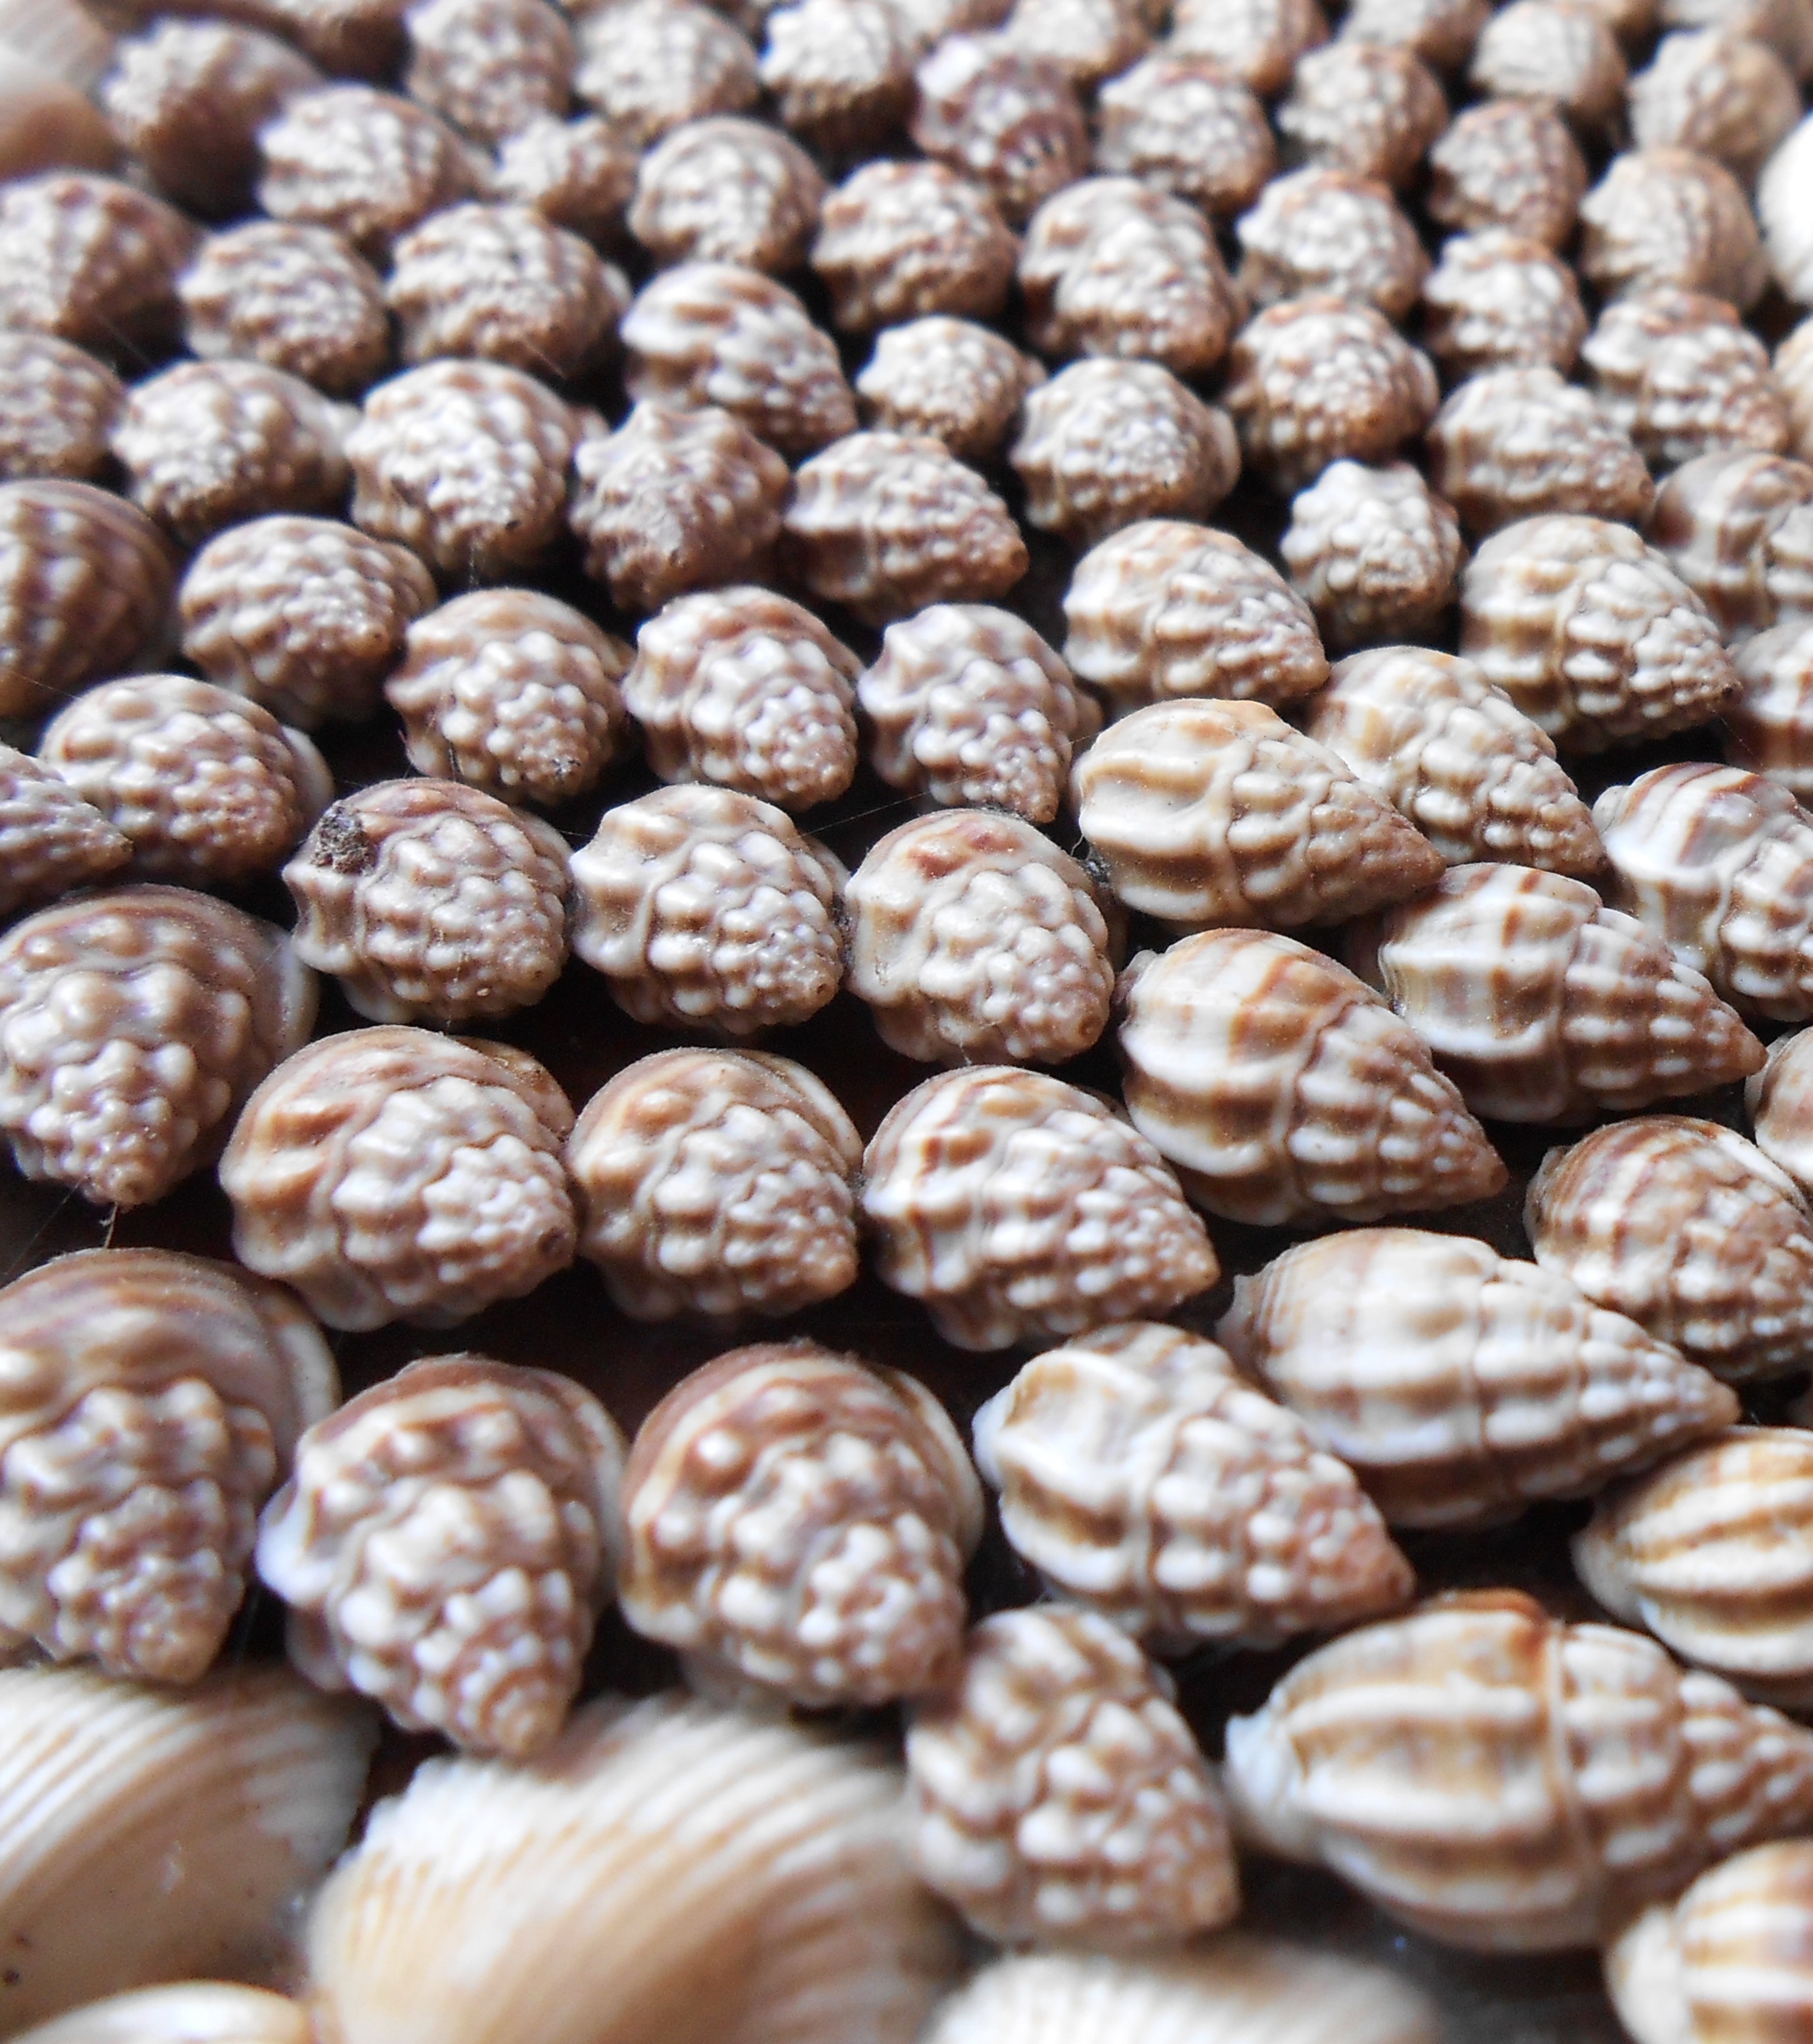 sea shells lot